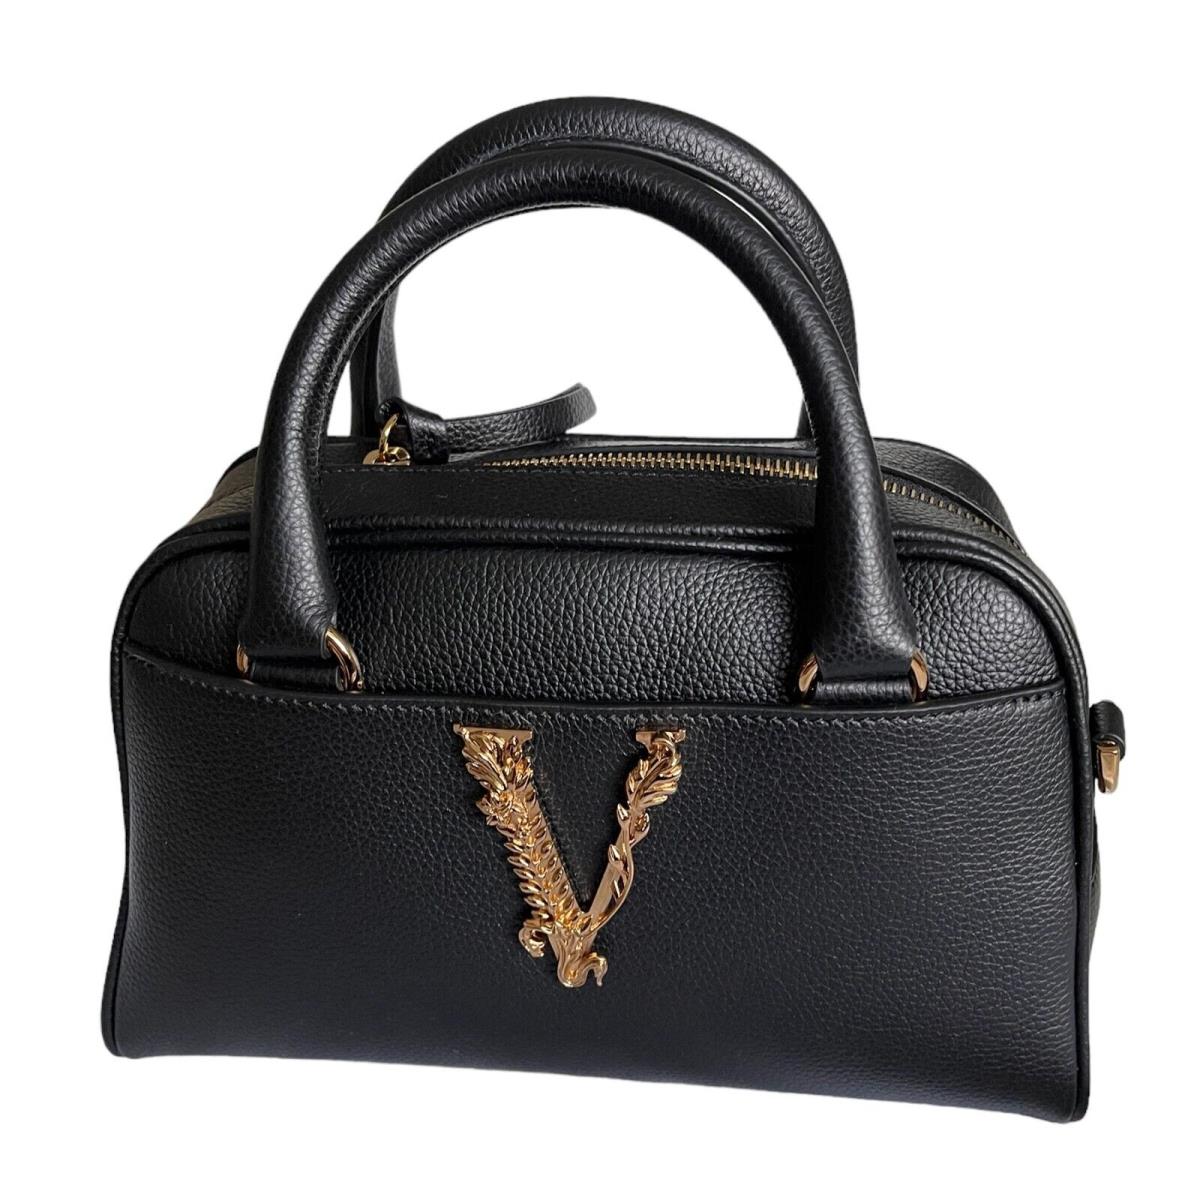 Versace Black Grainy Calf Leather Bowling Bag Shoulder Bag 1011783